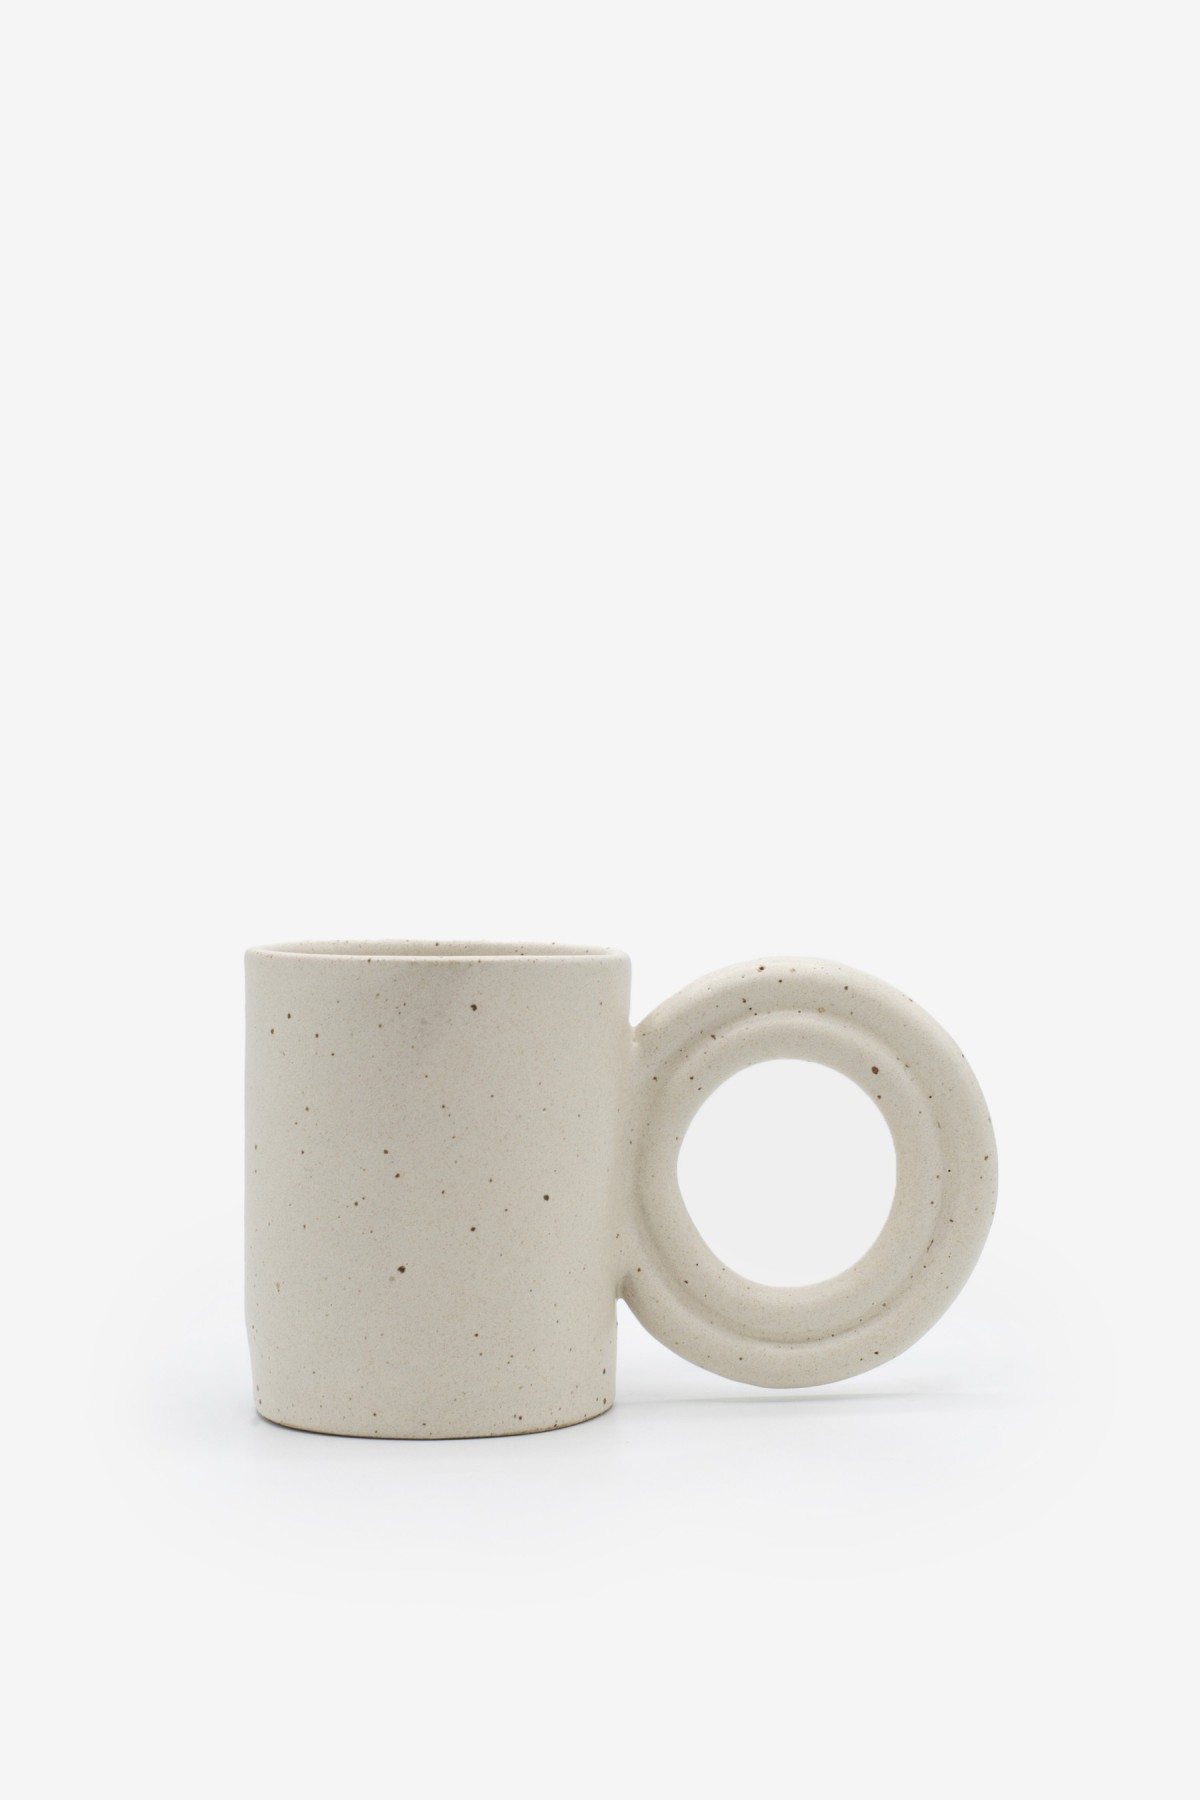 Miyelle Hoopla Mug in Speckled Cream